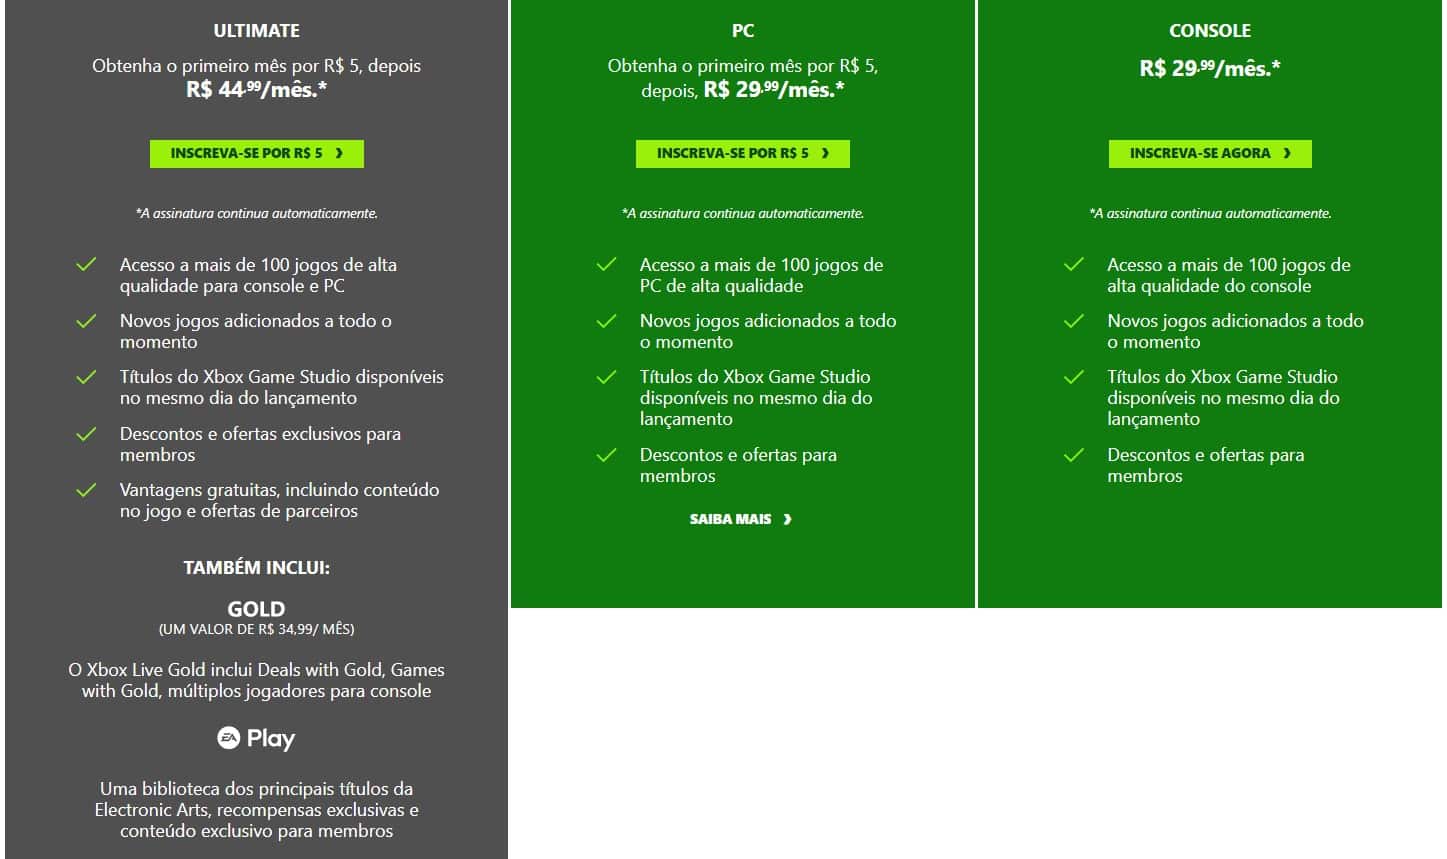 Xbox Game Pass Ultimate - Como assinar, gerenciar e cancelar no